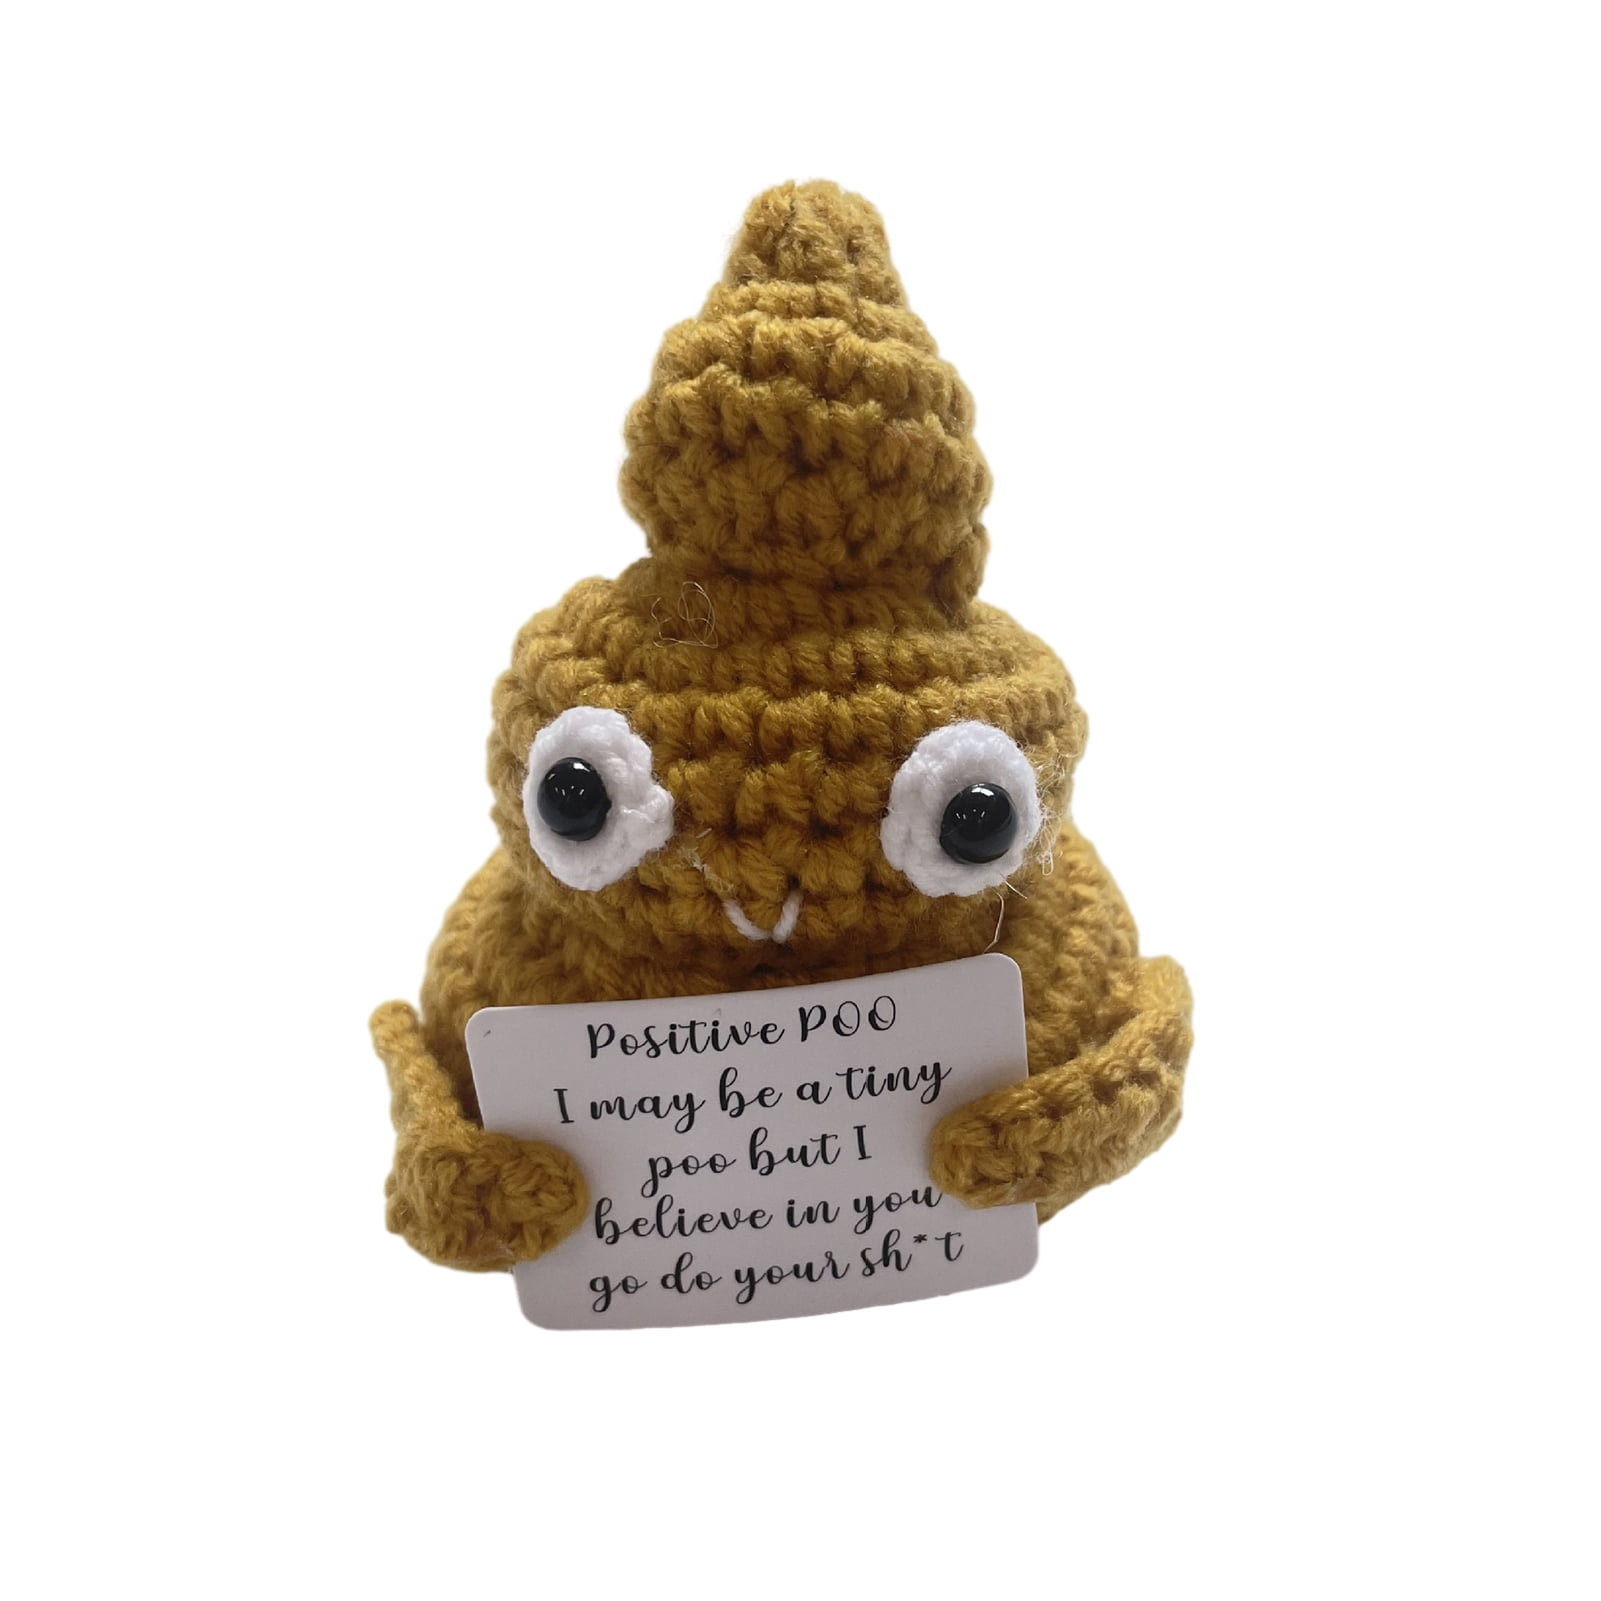 Trayknick Knitting Inspired Toy Handmade Positive Poop Crochet Keyring  Pendant Cute Cartoon-inspired Knitting Toy for Home Room Decor Funny  Christmas Gift 